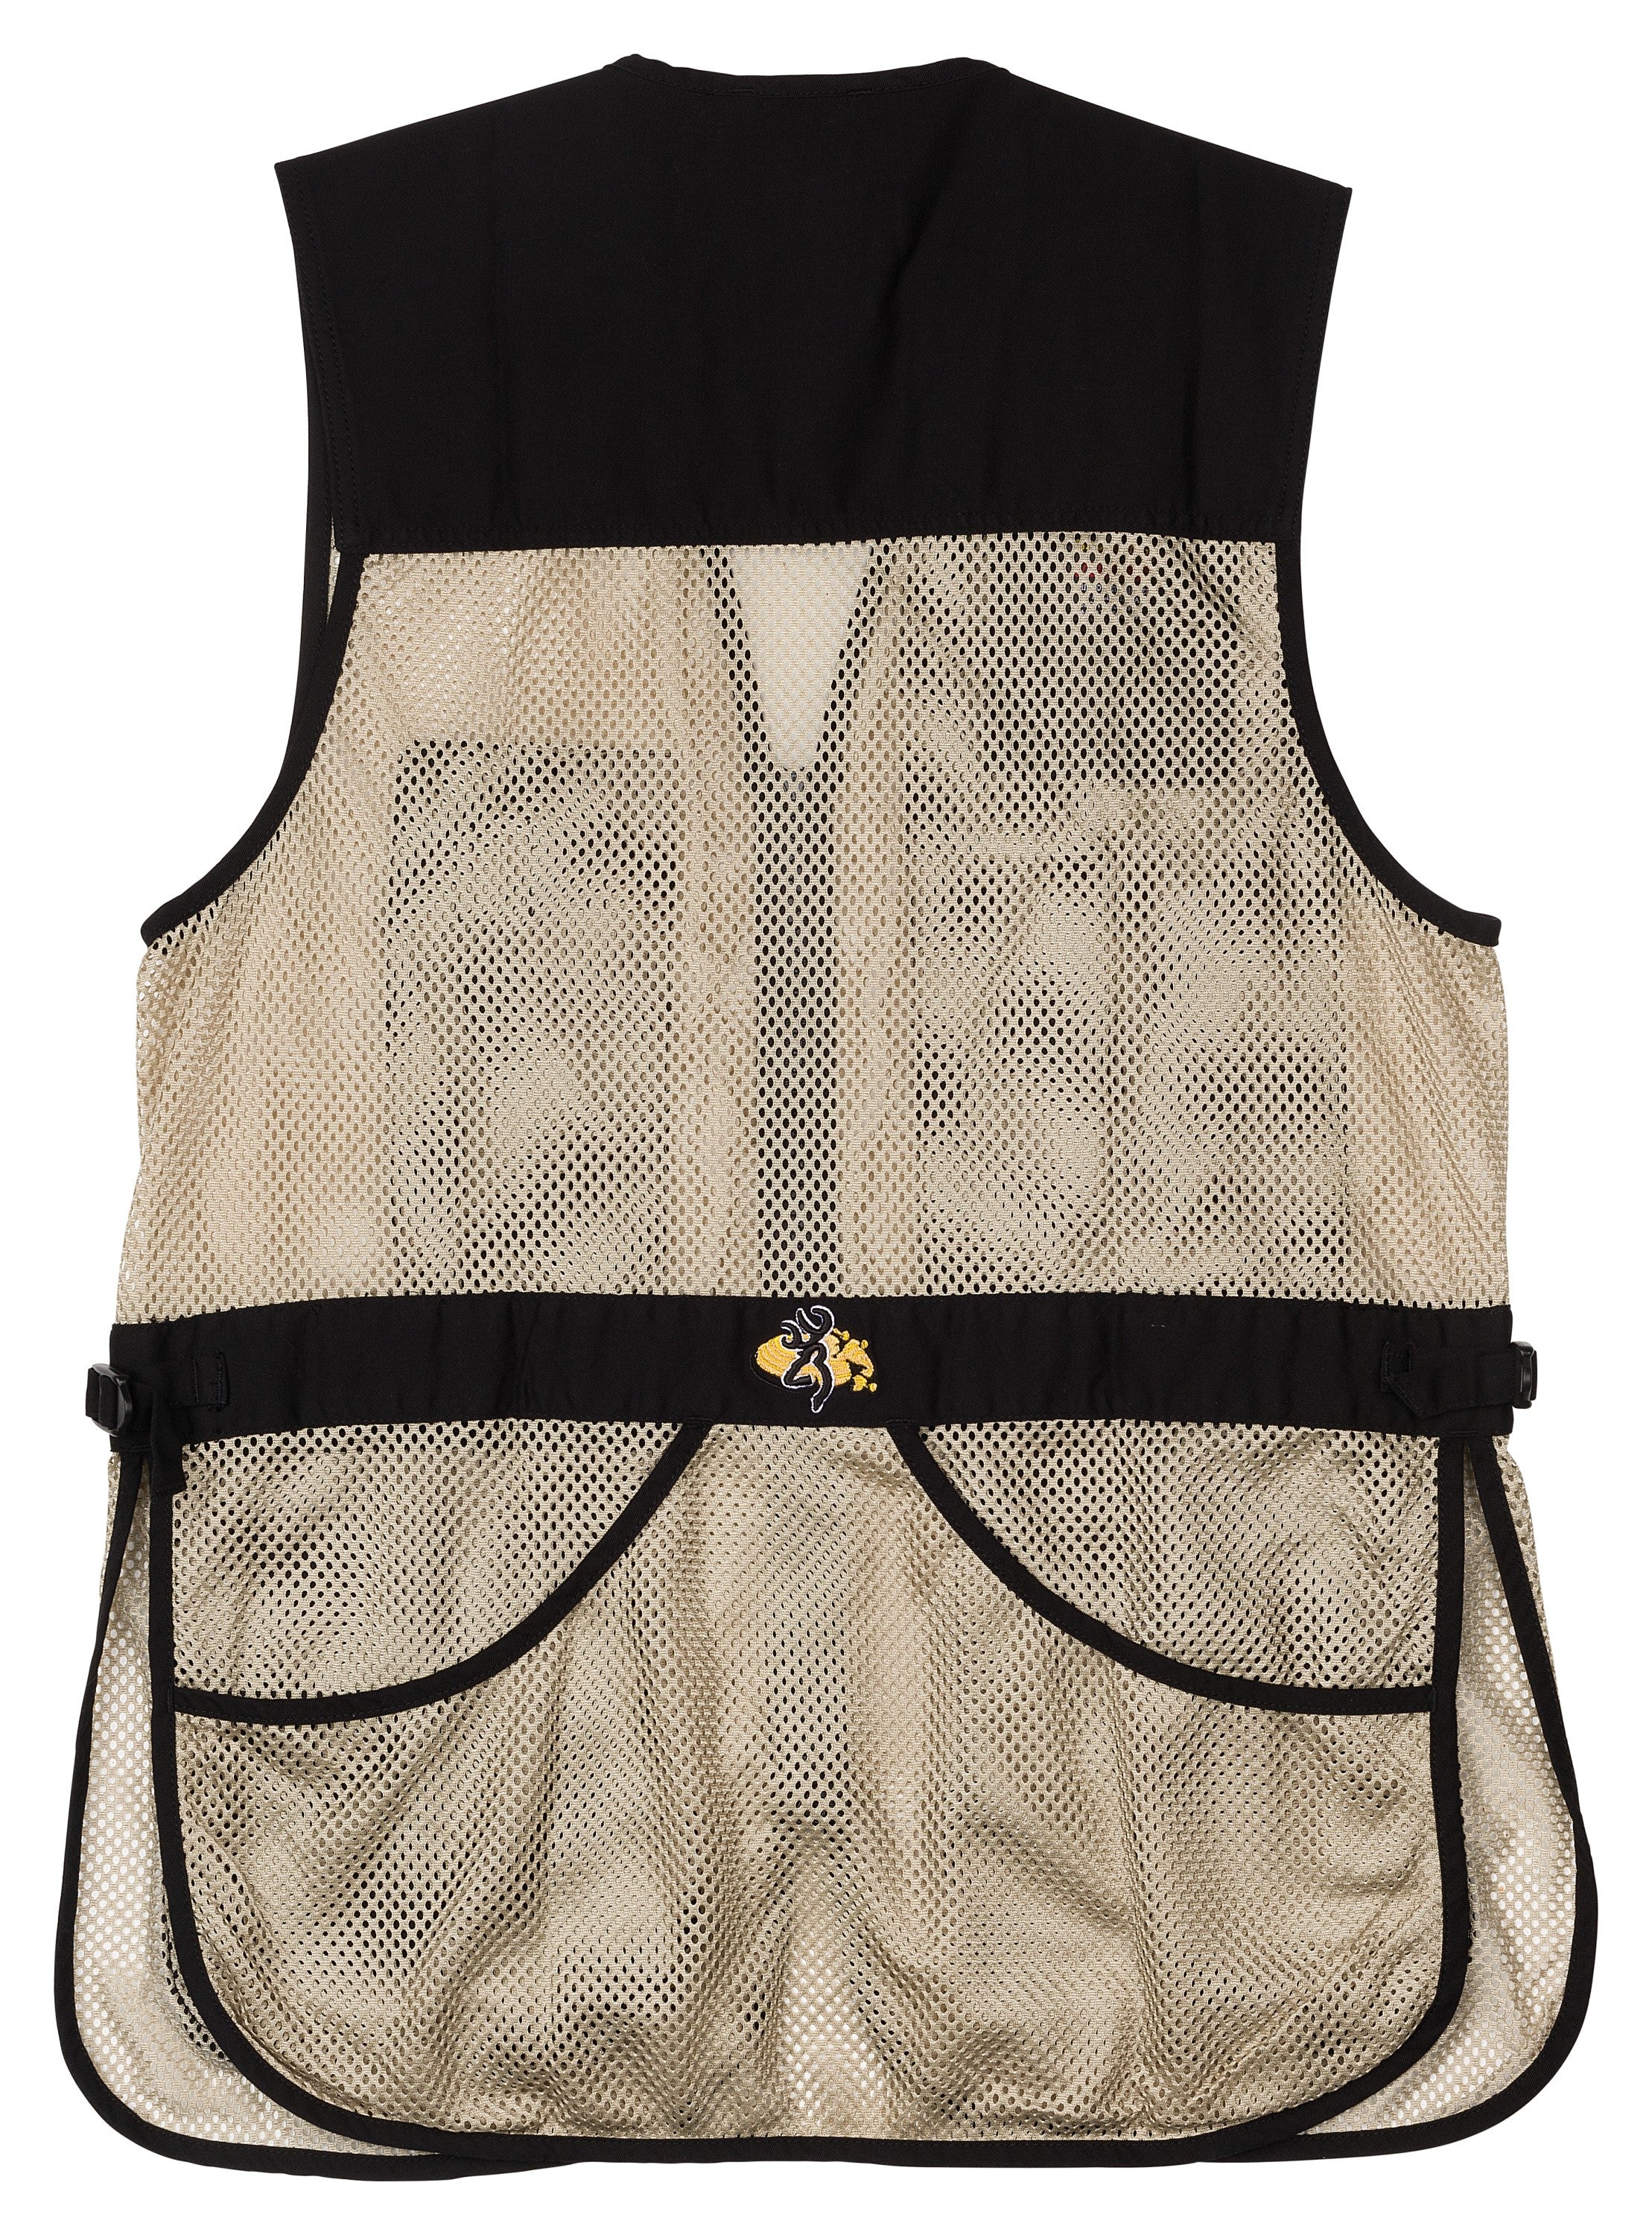 2XL 3050267105 Black Red Browning Trapper Creek Shooting Vest 